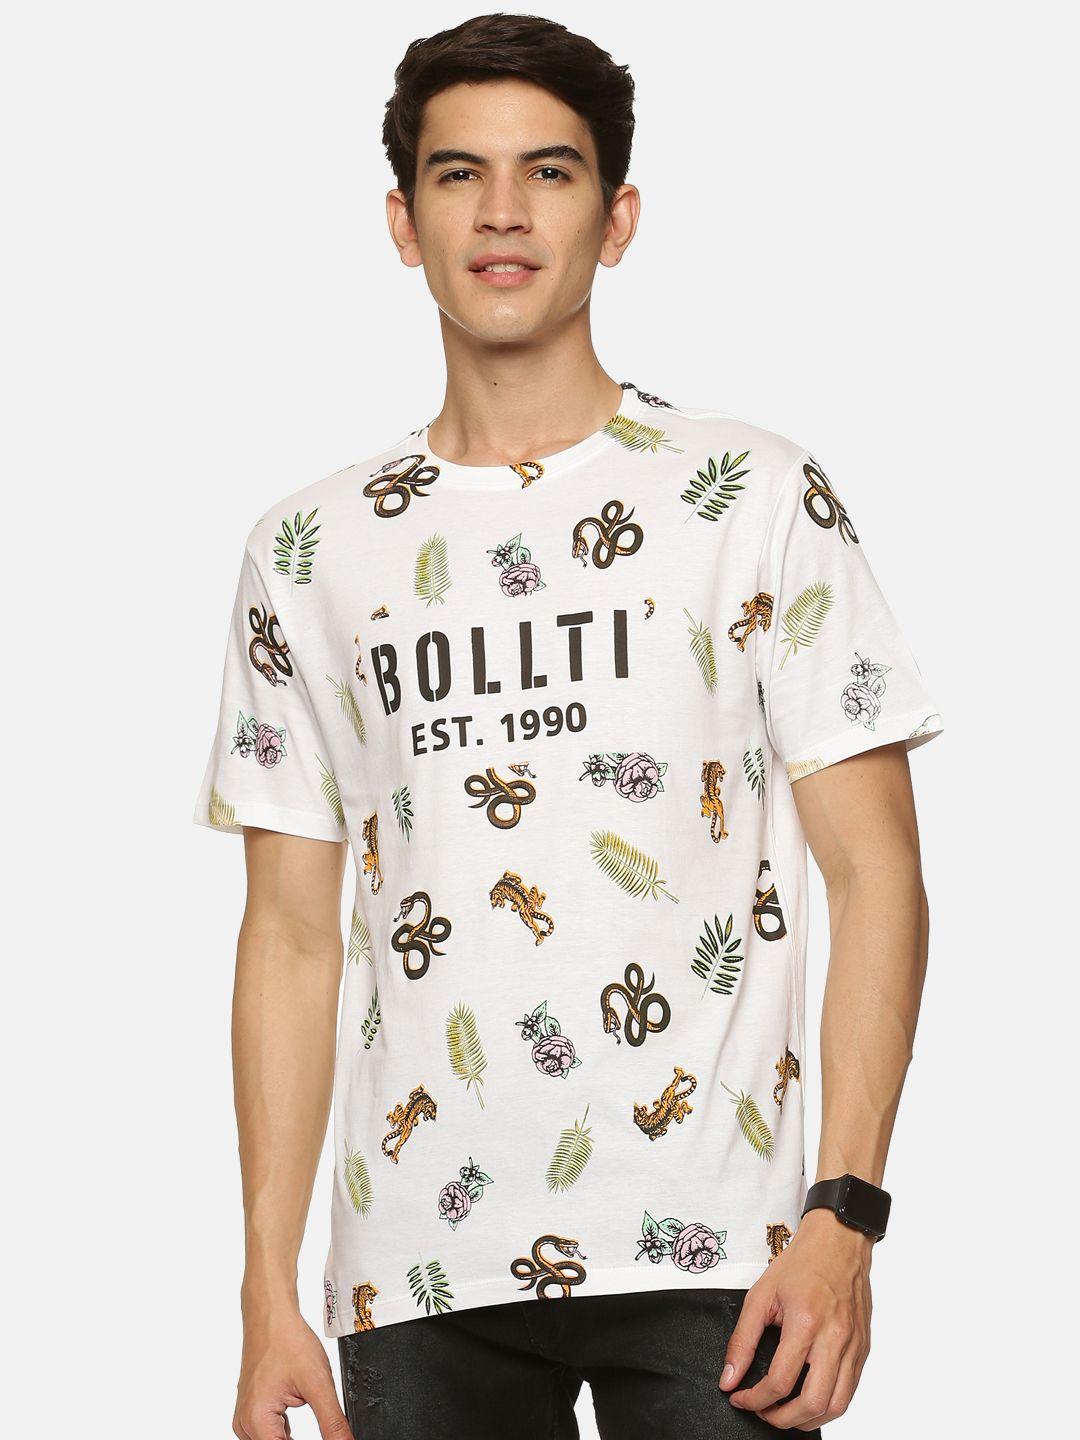 bollti conversational printed round neck short sleeves pure cotton t-shirt